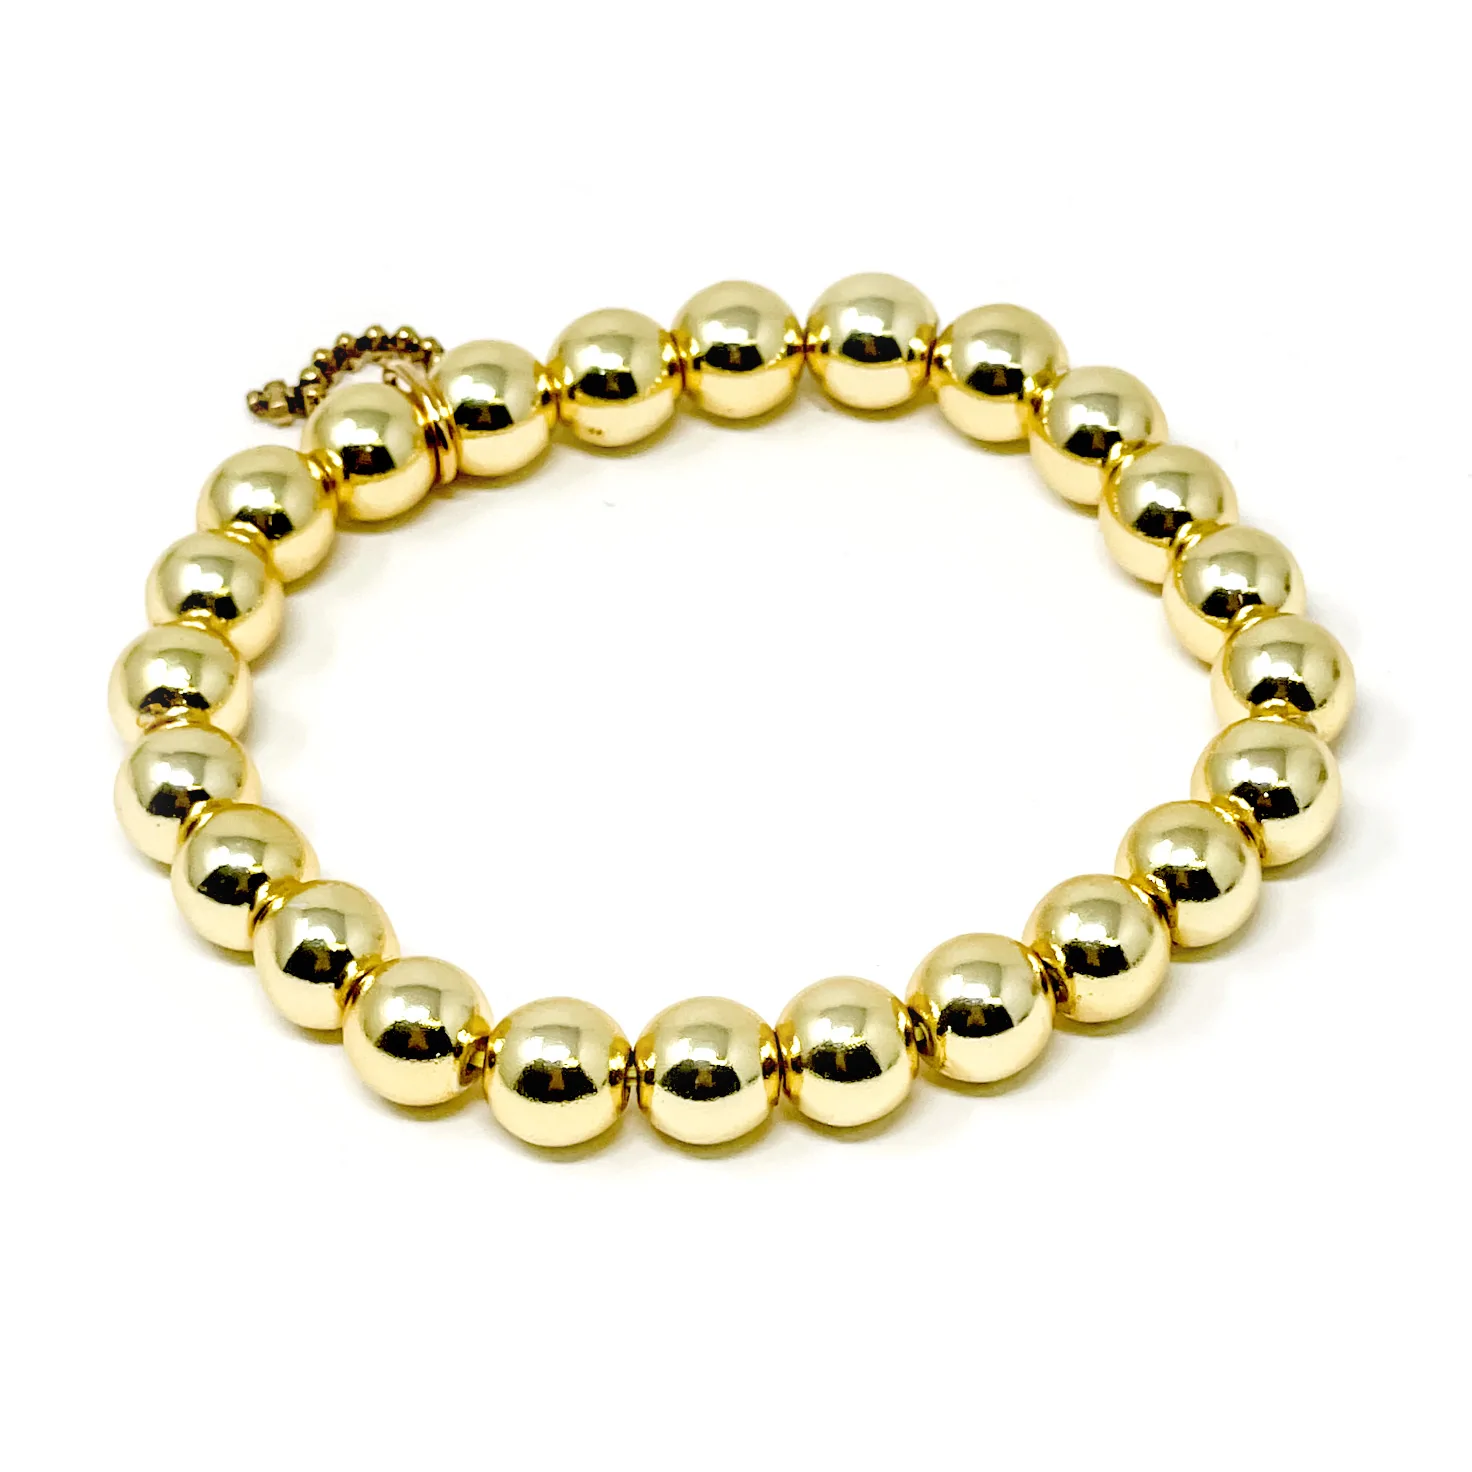 Buy Jens Pind Bracelet Jewelry Tutorial Online in India - Etsy